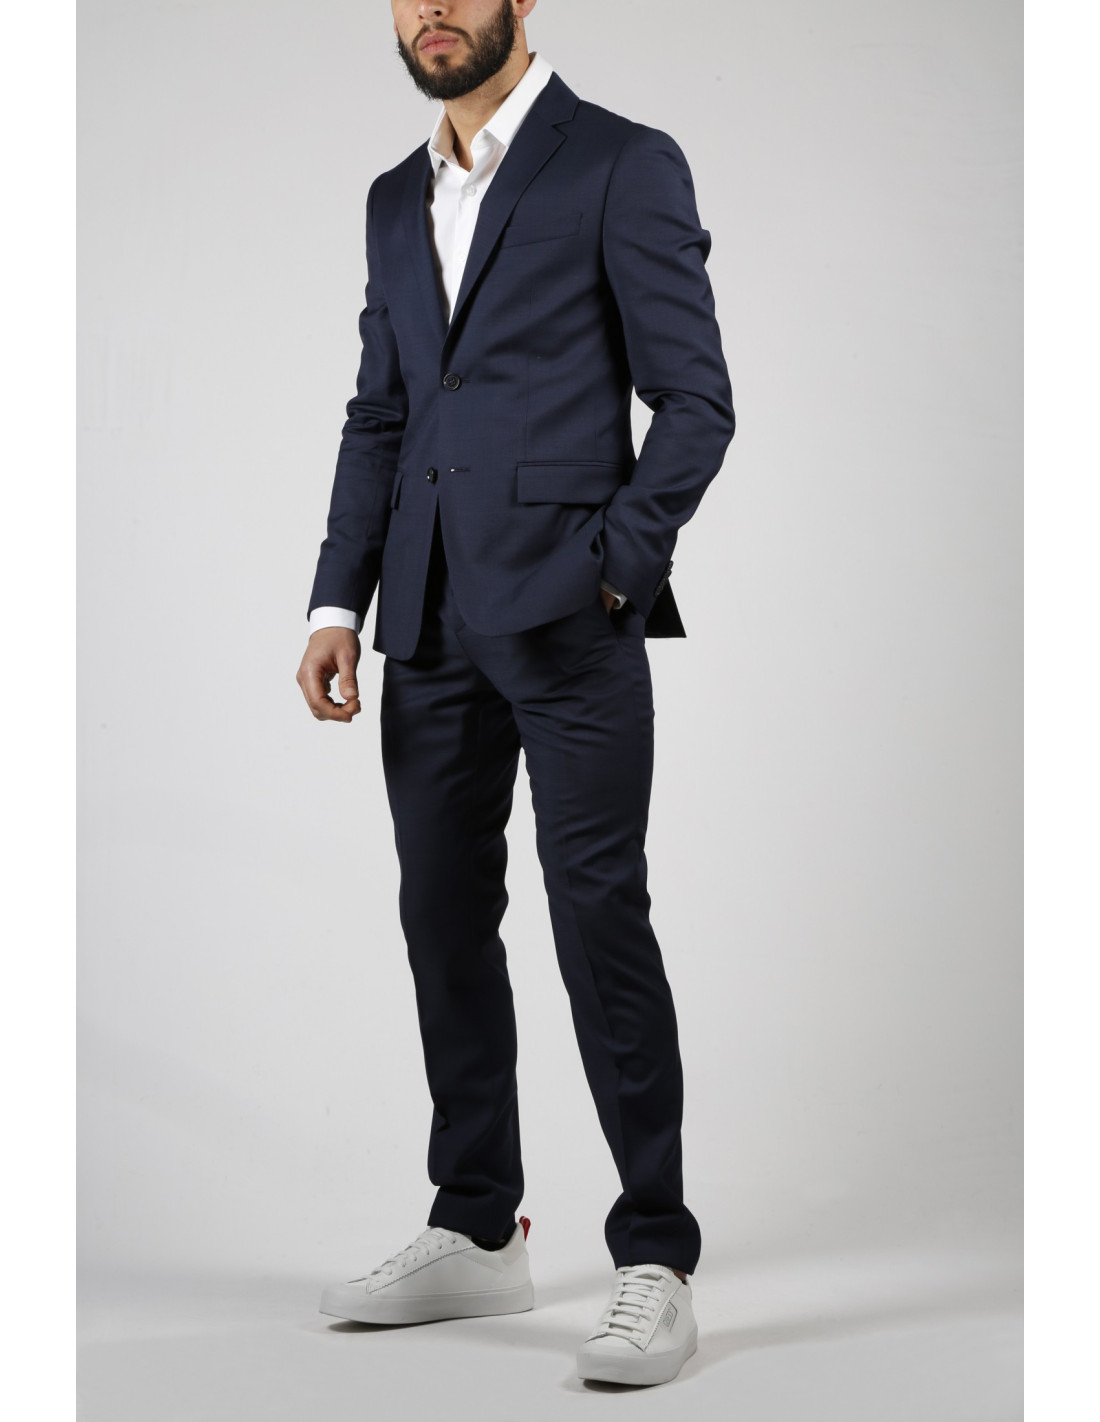 Buy Calvin Klein Tuxedo Black Solid Satin Two Button Men's Suit (38R 32W)  (38R 32W) at Amazon.in